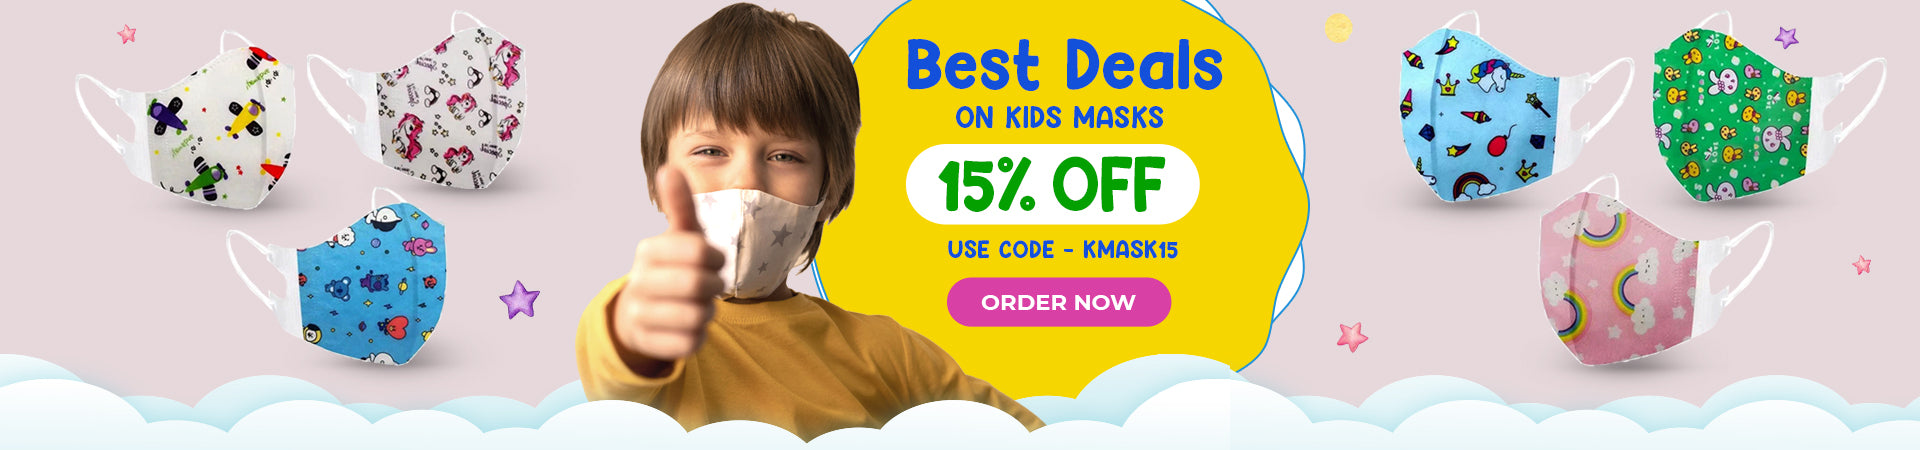 Best Deals on Kids Masks